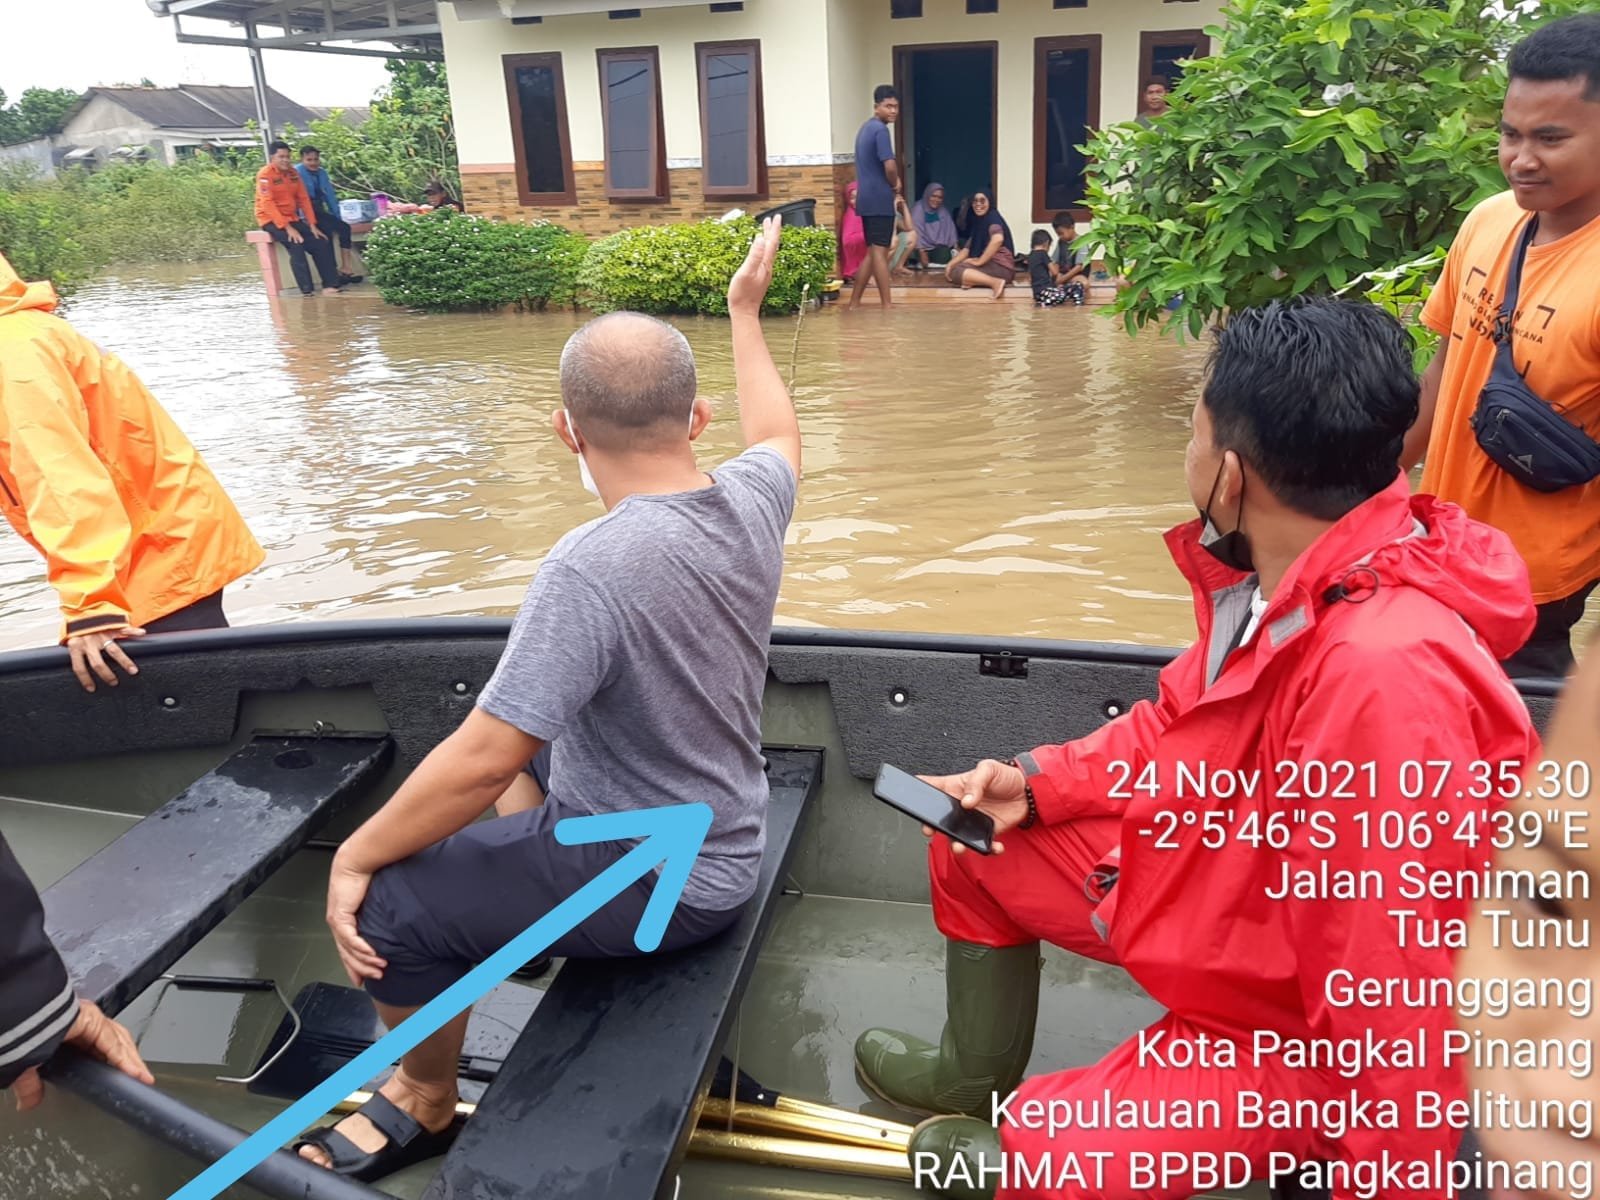 Dapatkan Laporan Banjir, Walikota Sigap Datangi Lokasi Dengan Menggunakan Perahu